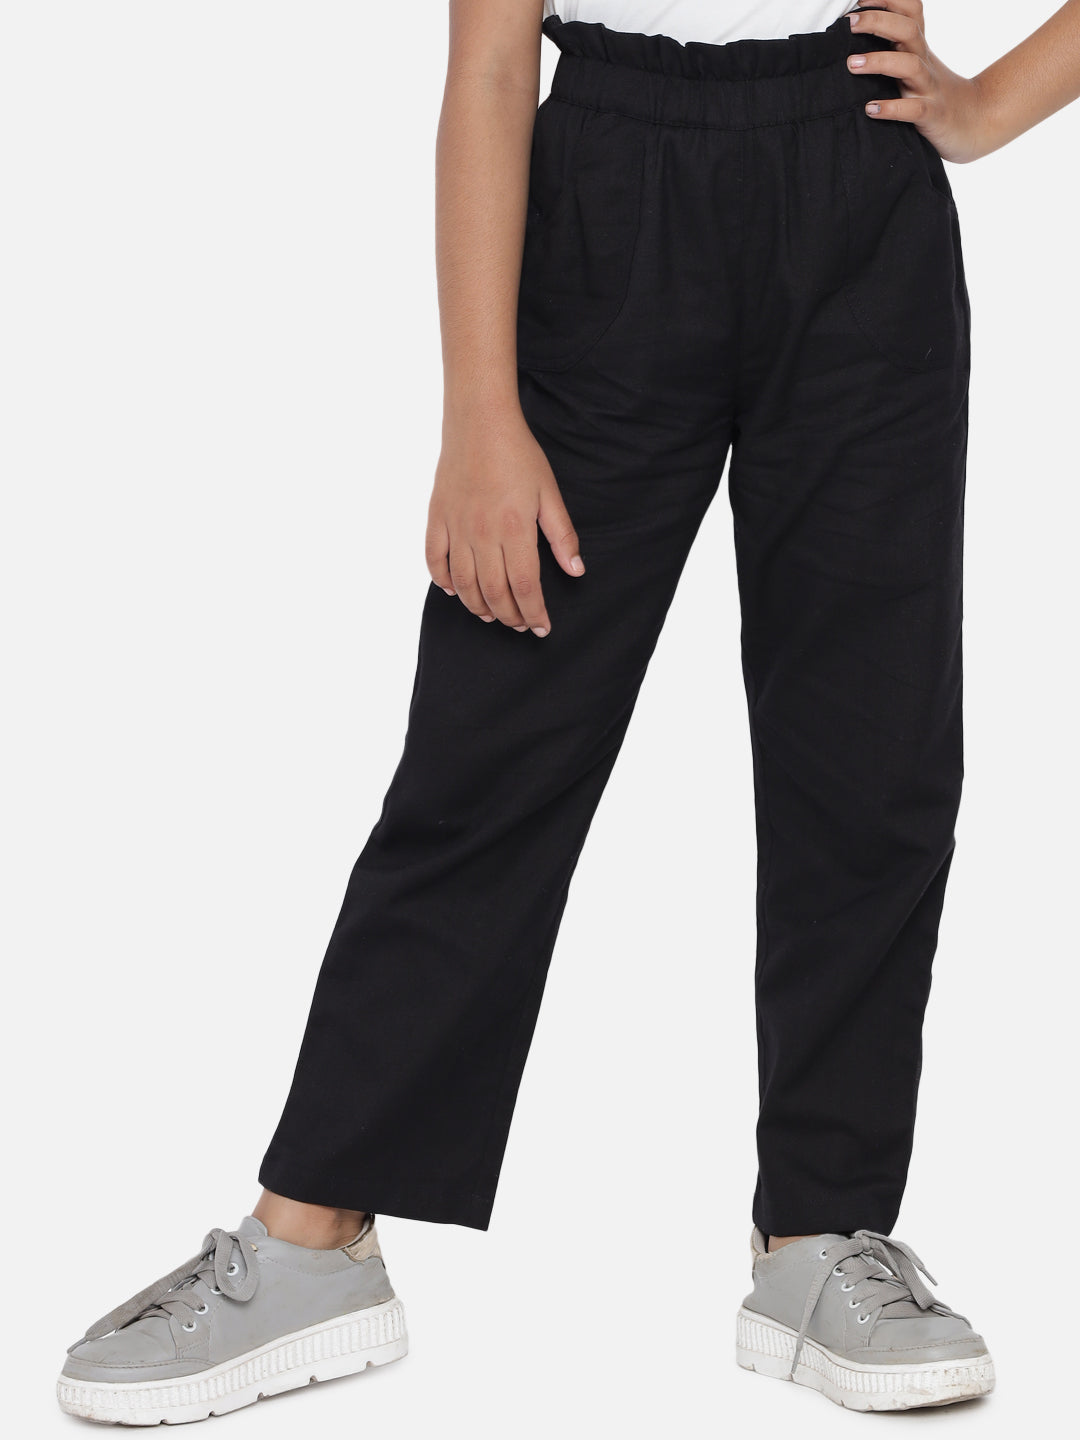 Buy women zip trouserswomen pants with zipzip jegging ladies trousers  black color Online  799 from ShopClues